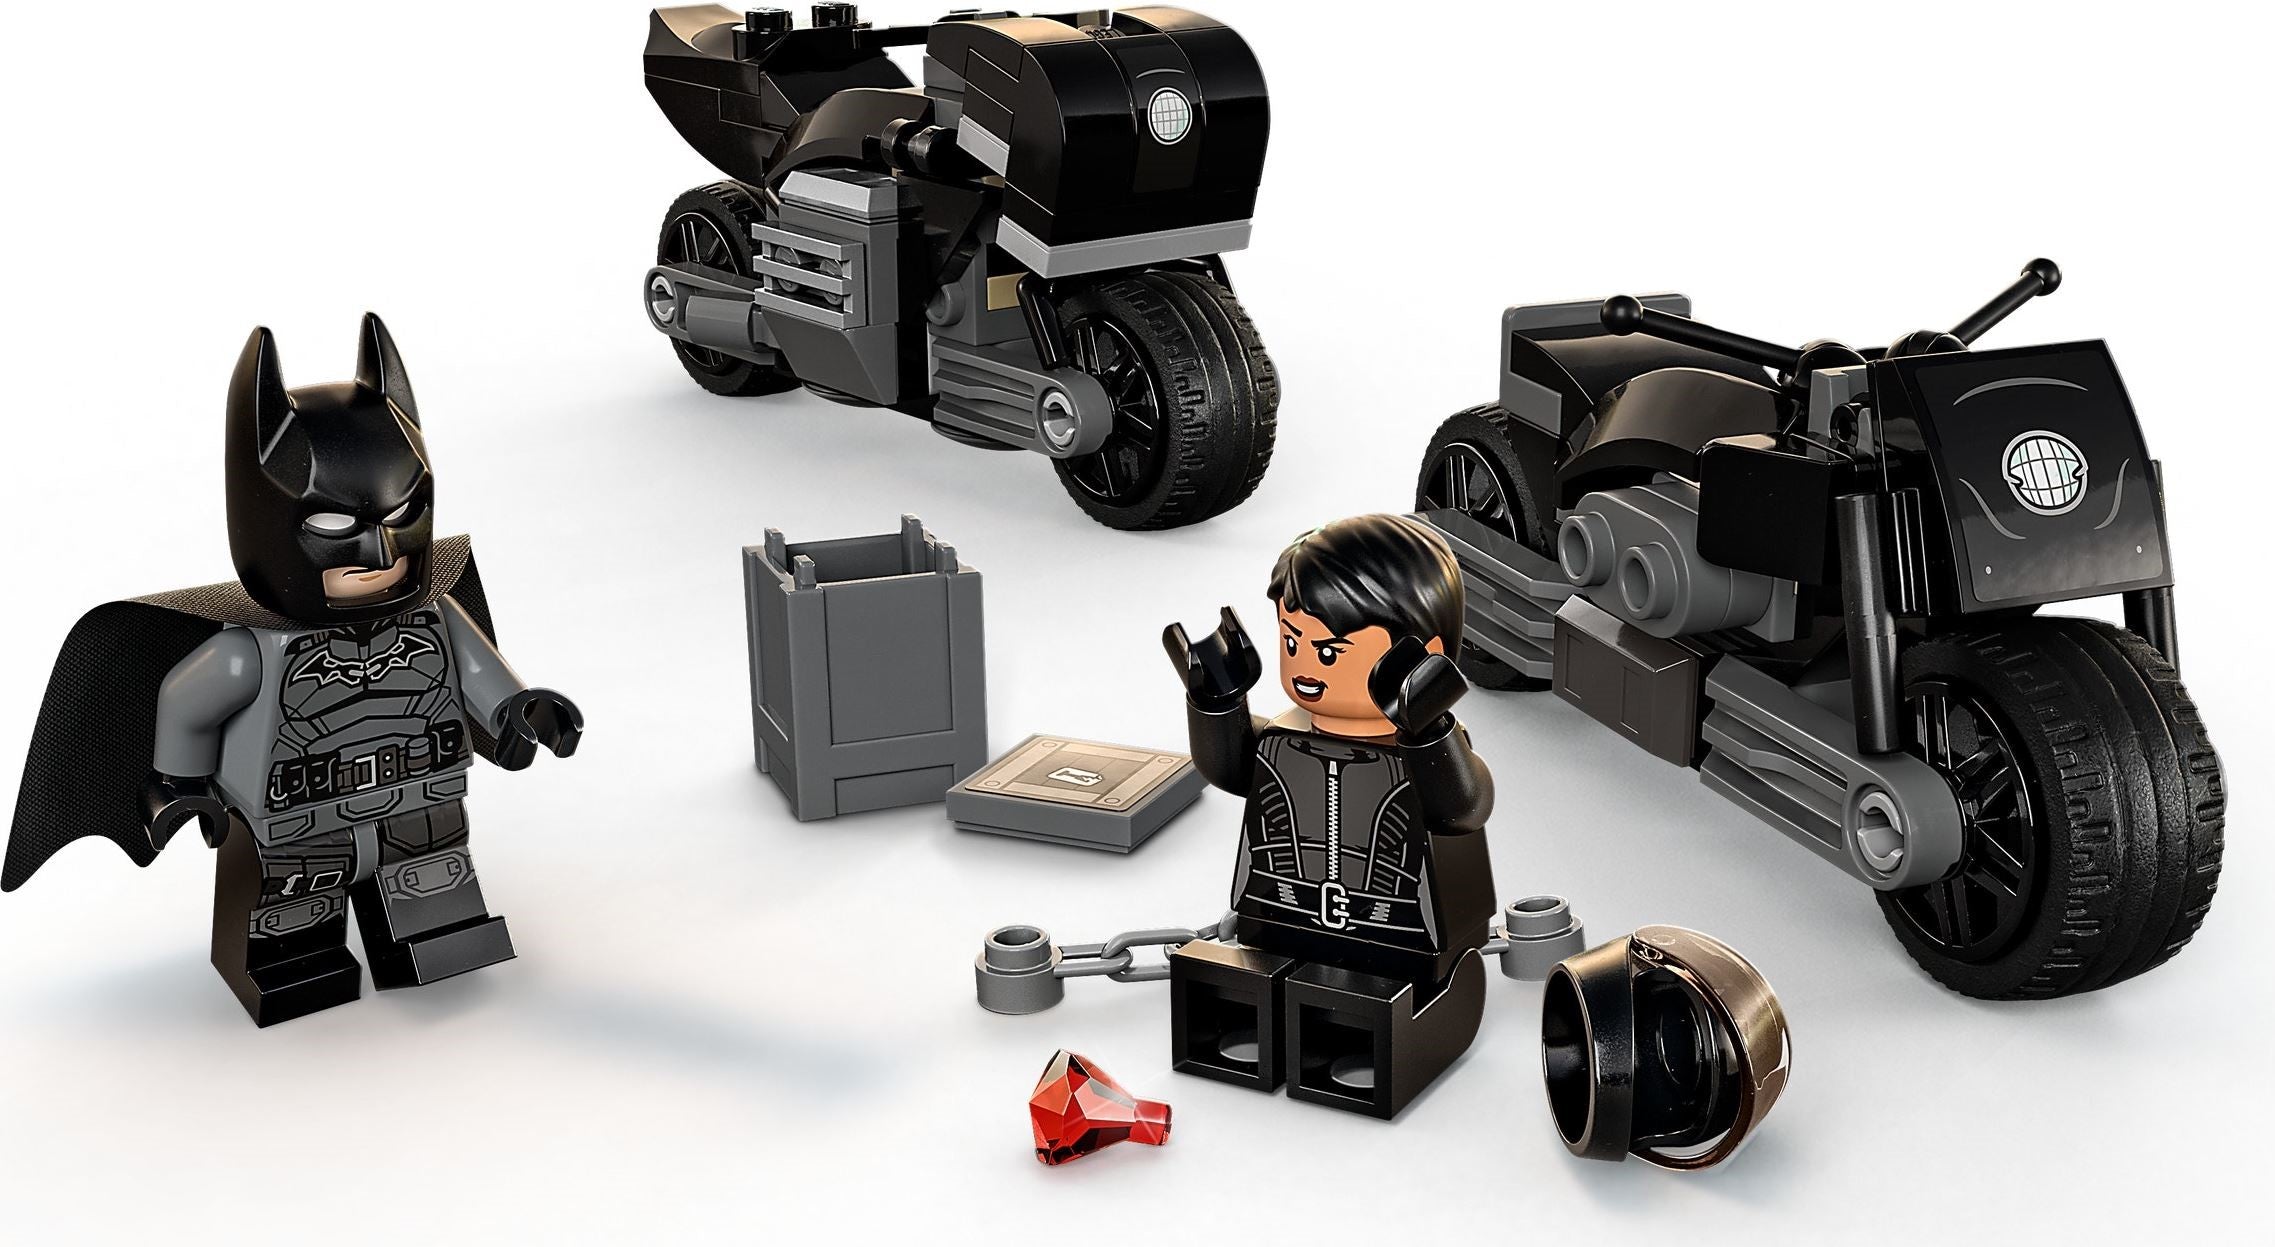 LEGO 76179 Batman & Selina Kyle Motorcycle Pursuit